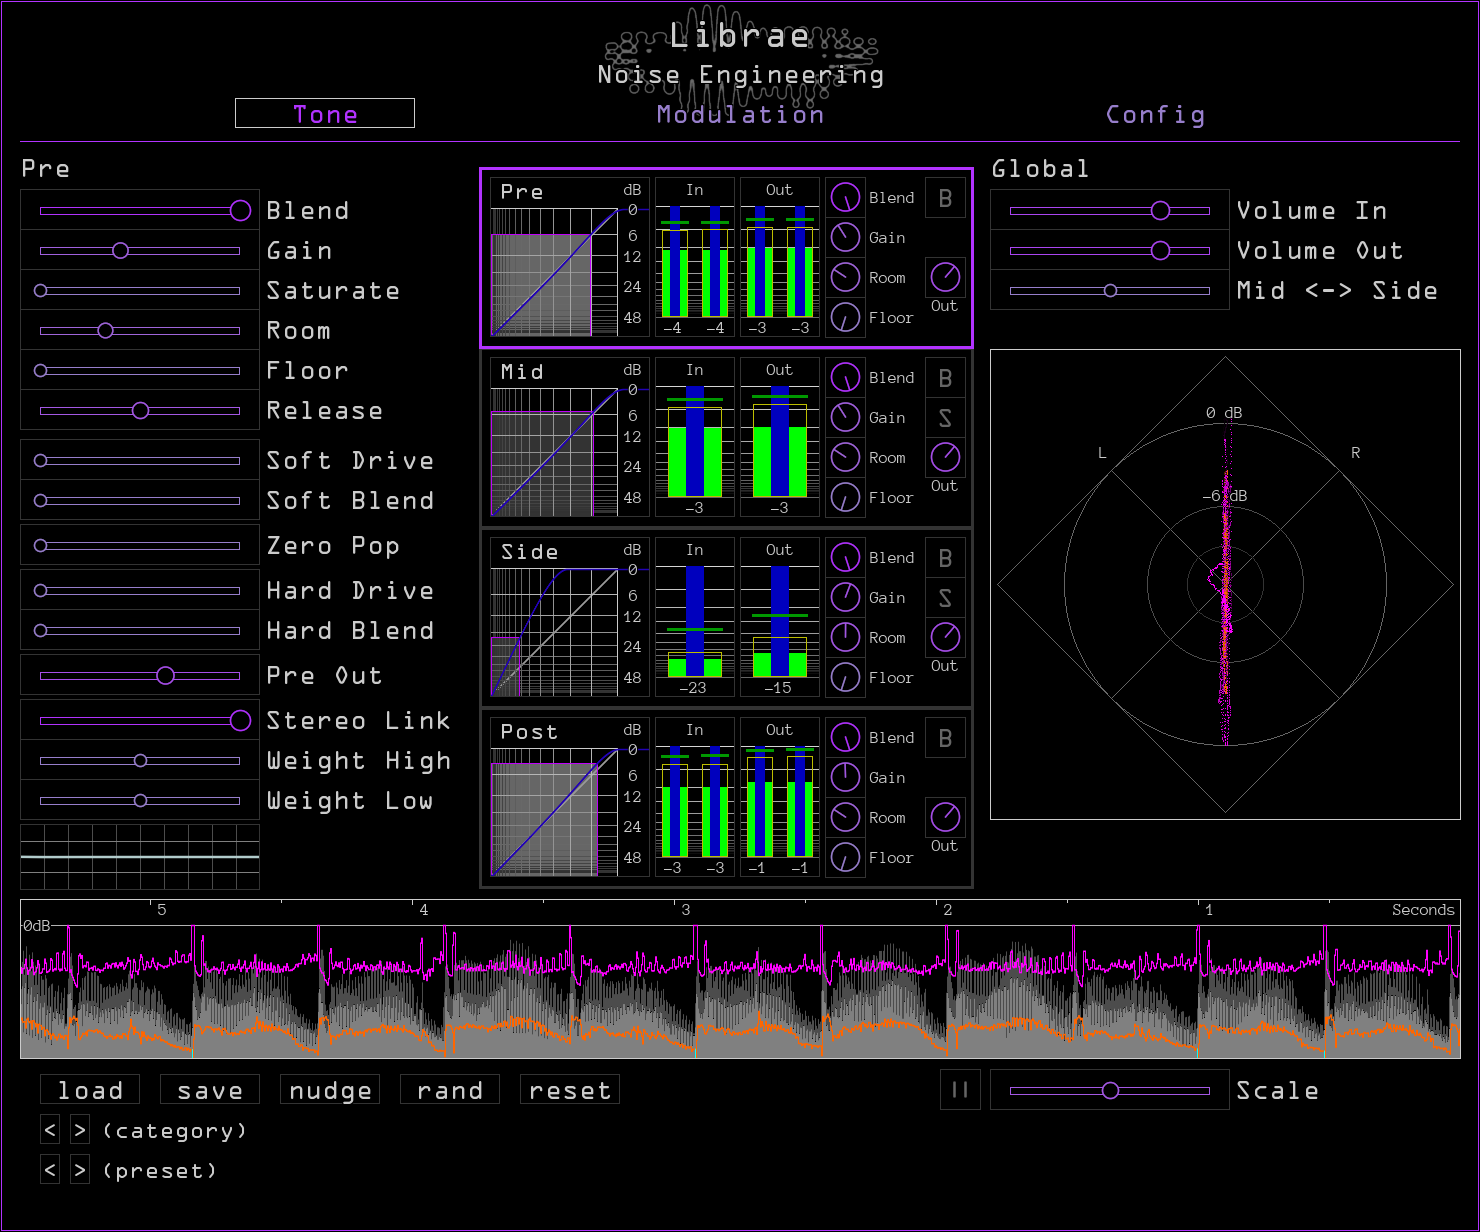 Librae's interface